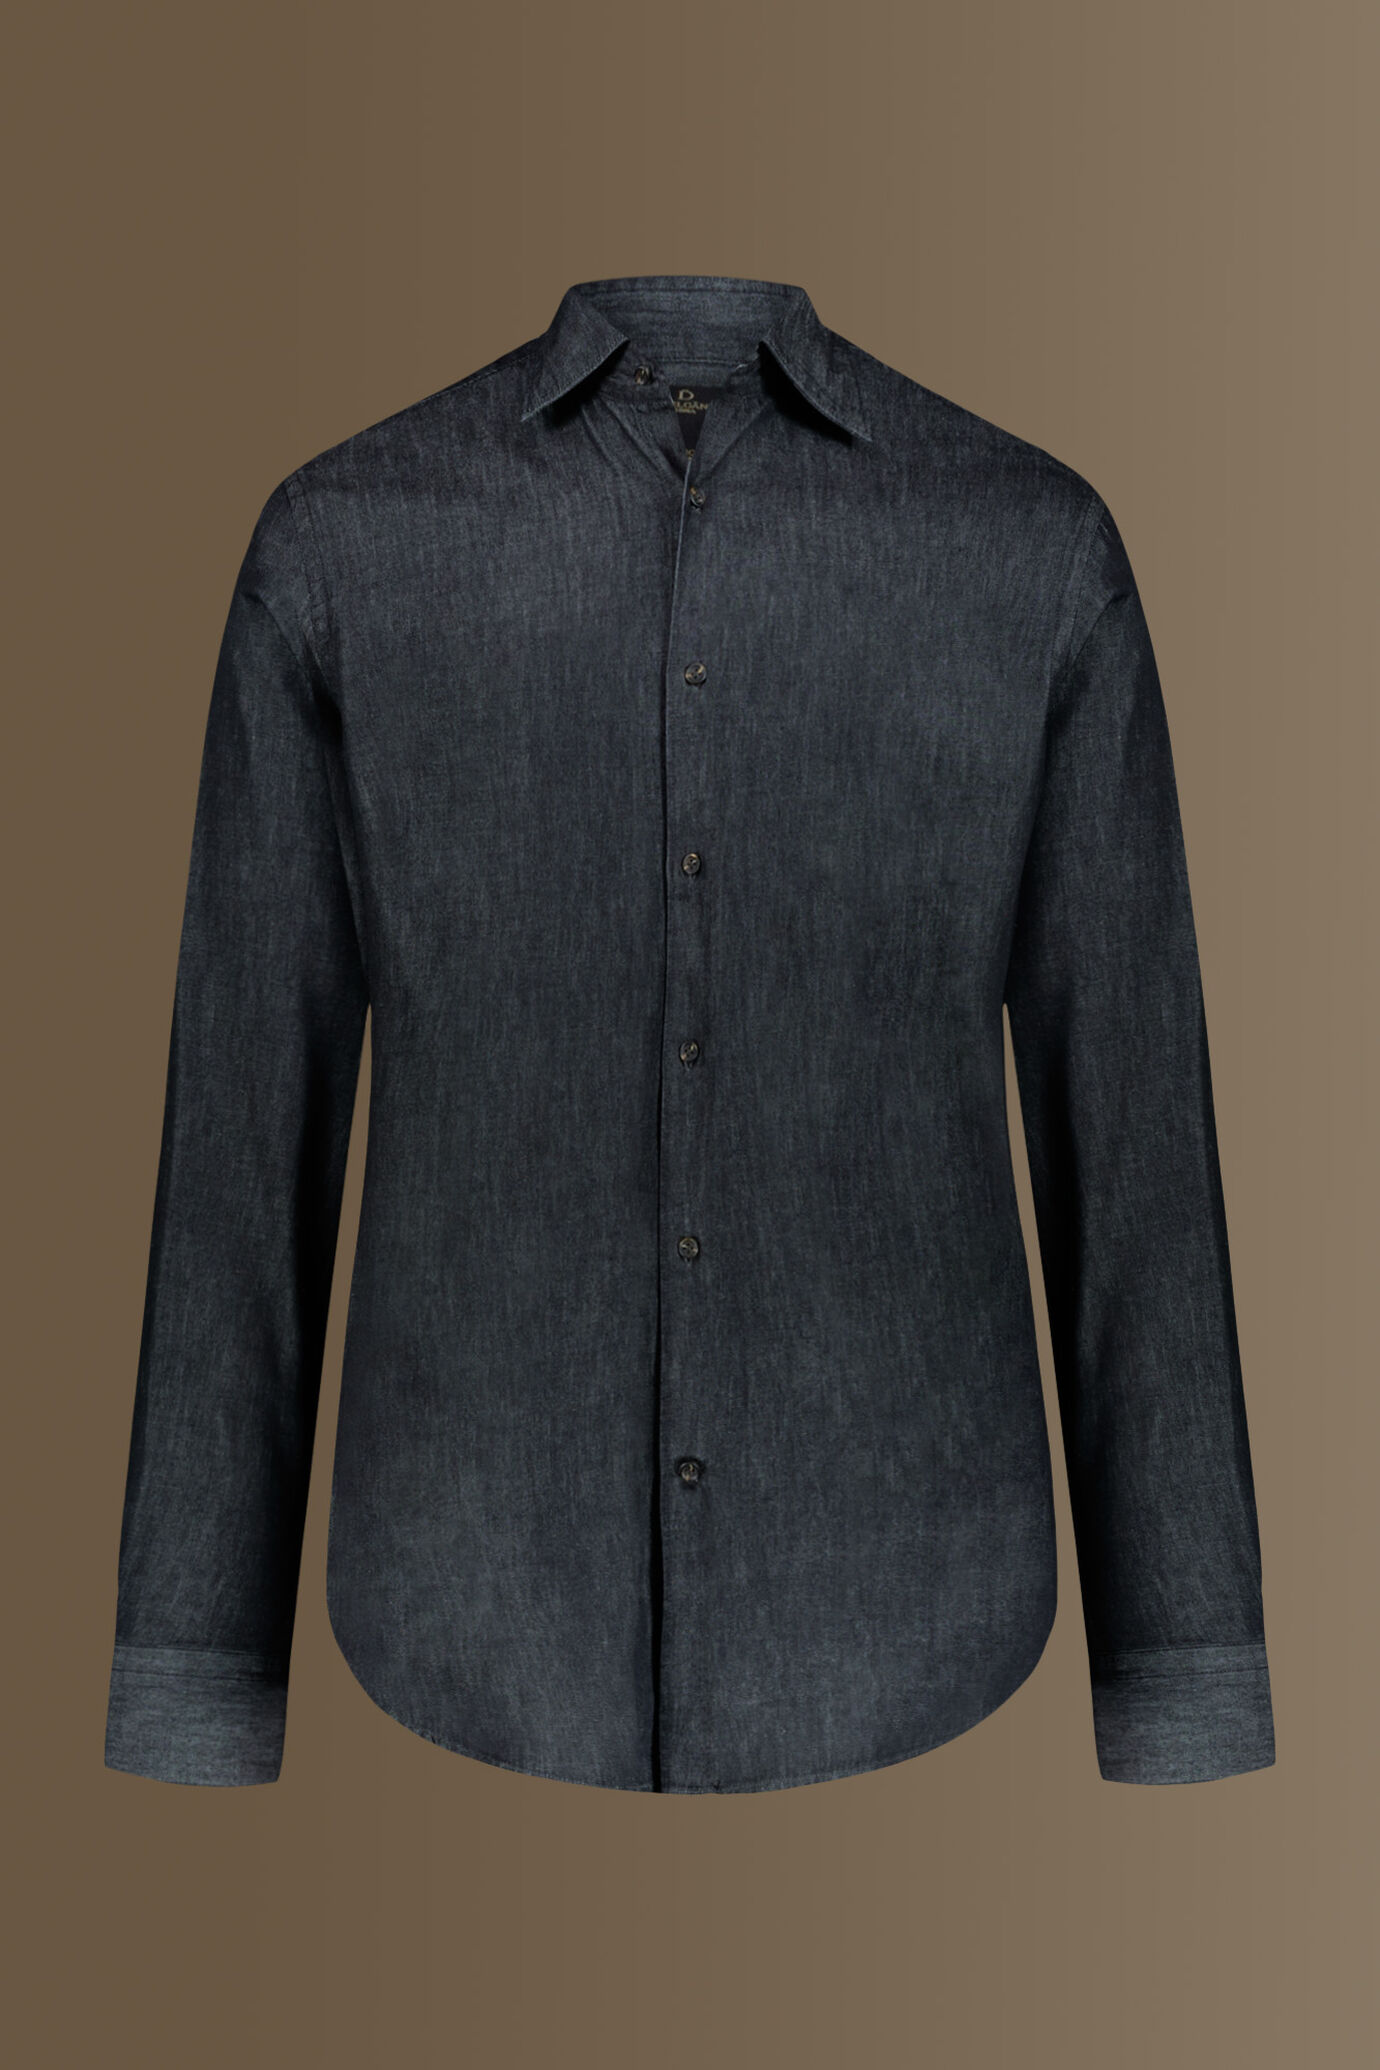 Camicia uomo casual collo francese 100% cotone denim grigio scuro image number 3